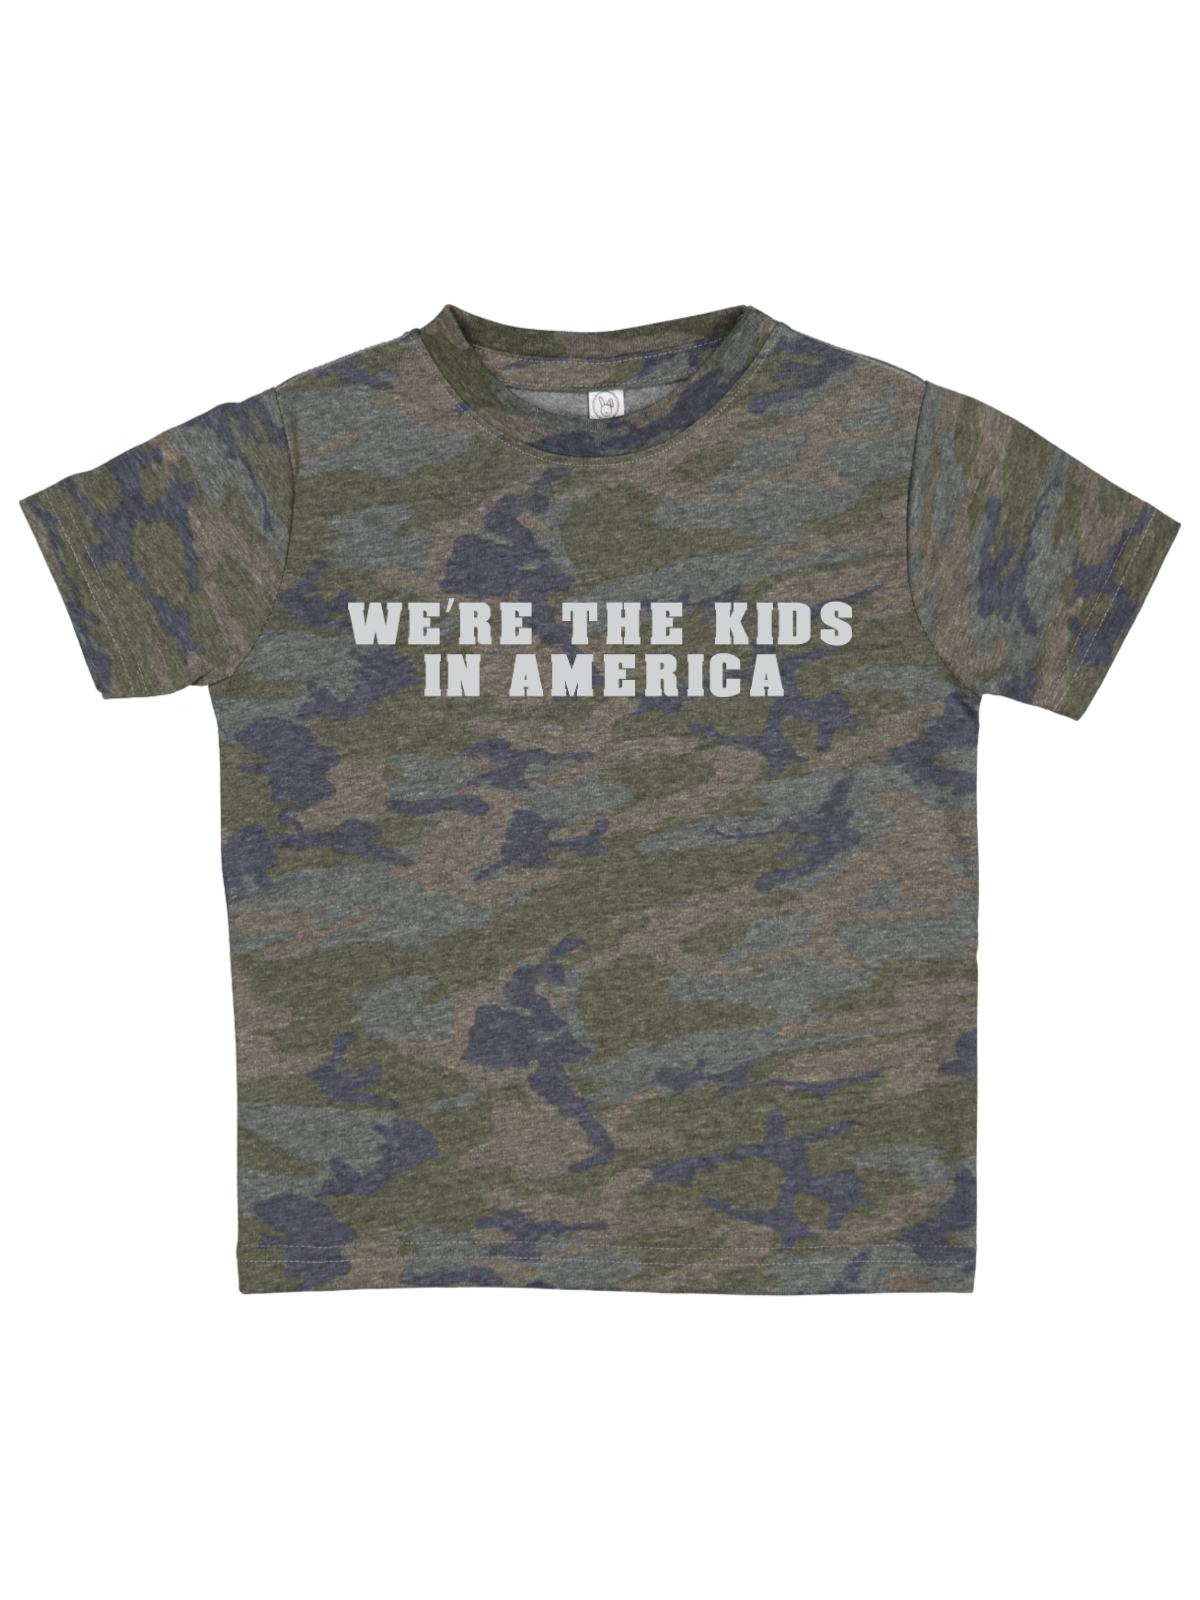 We're the Kids in America Kids Activist Shirt